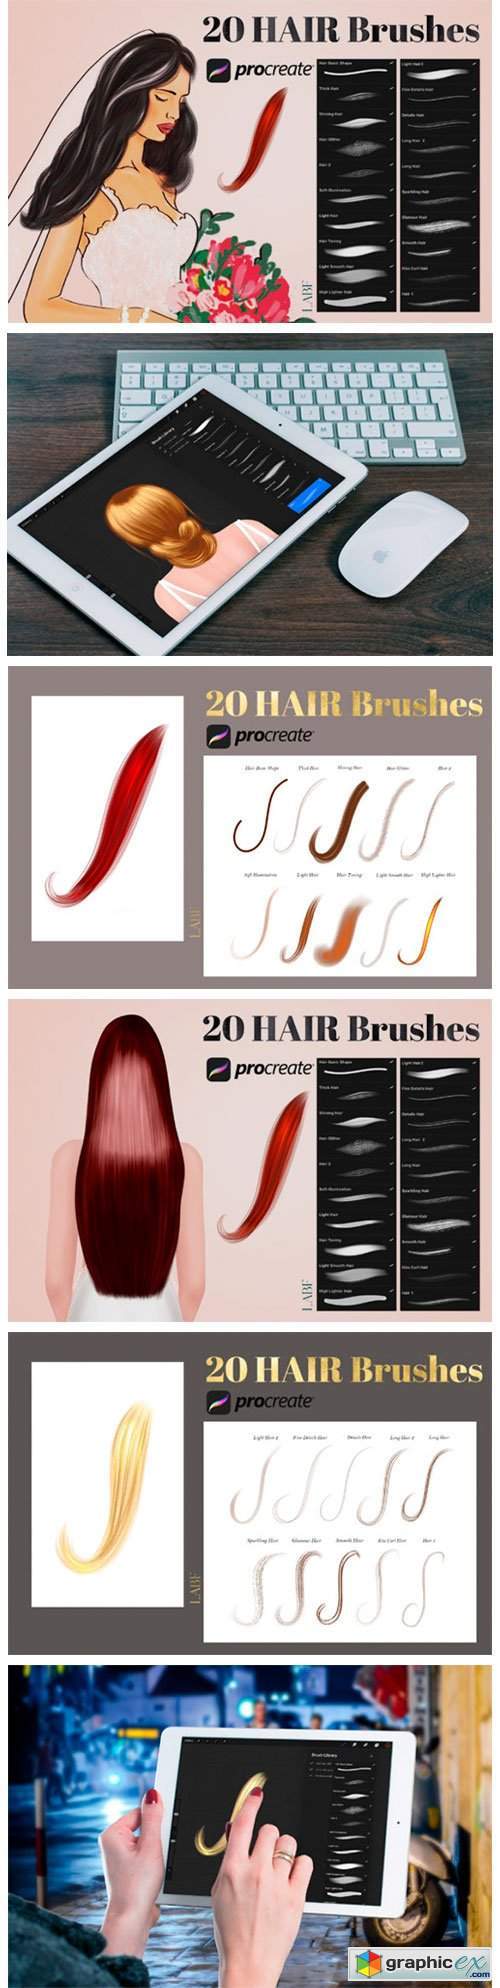 20 Hair Brushes for Procreate